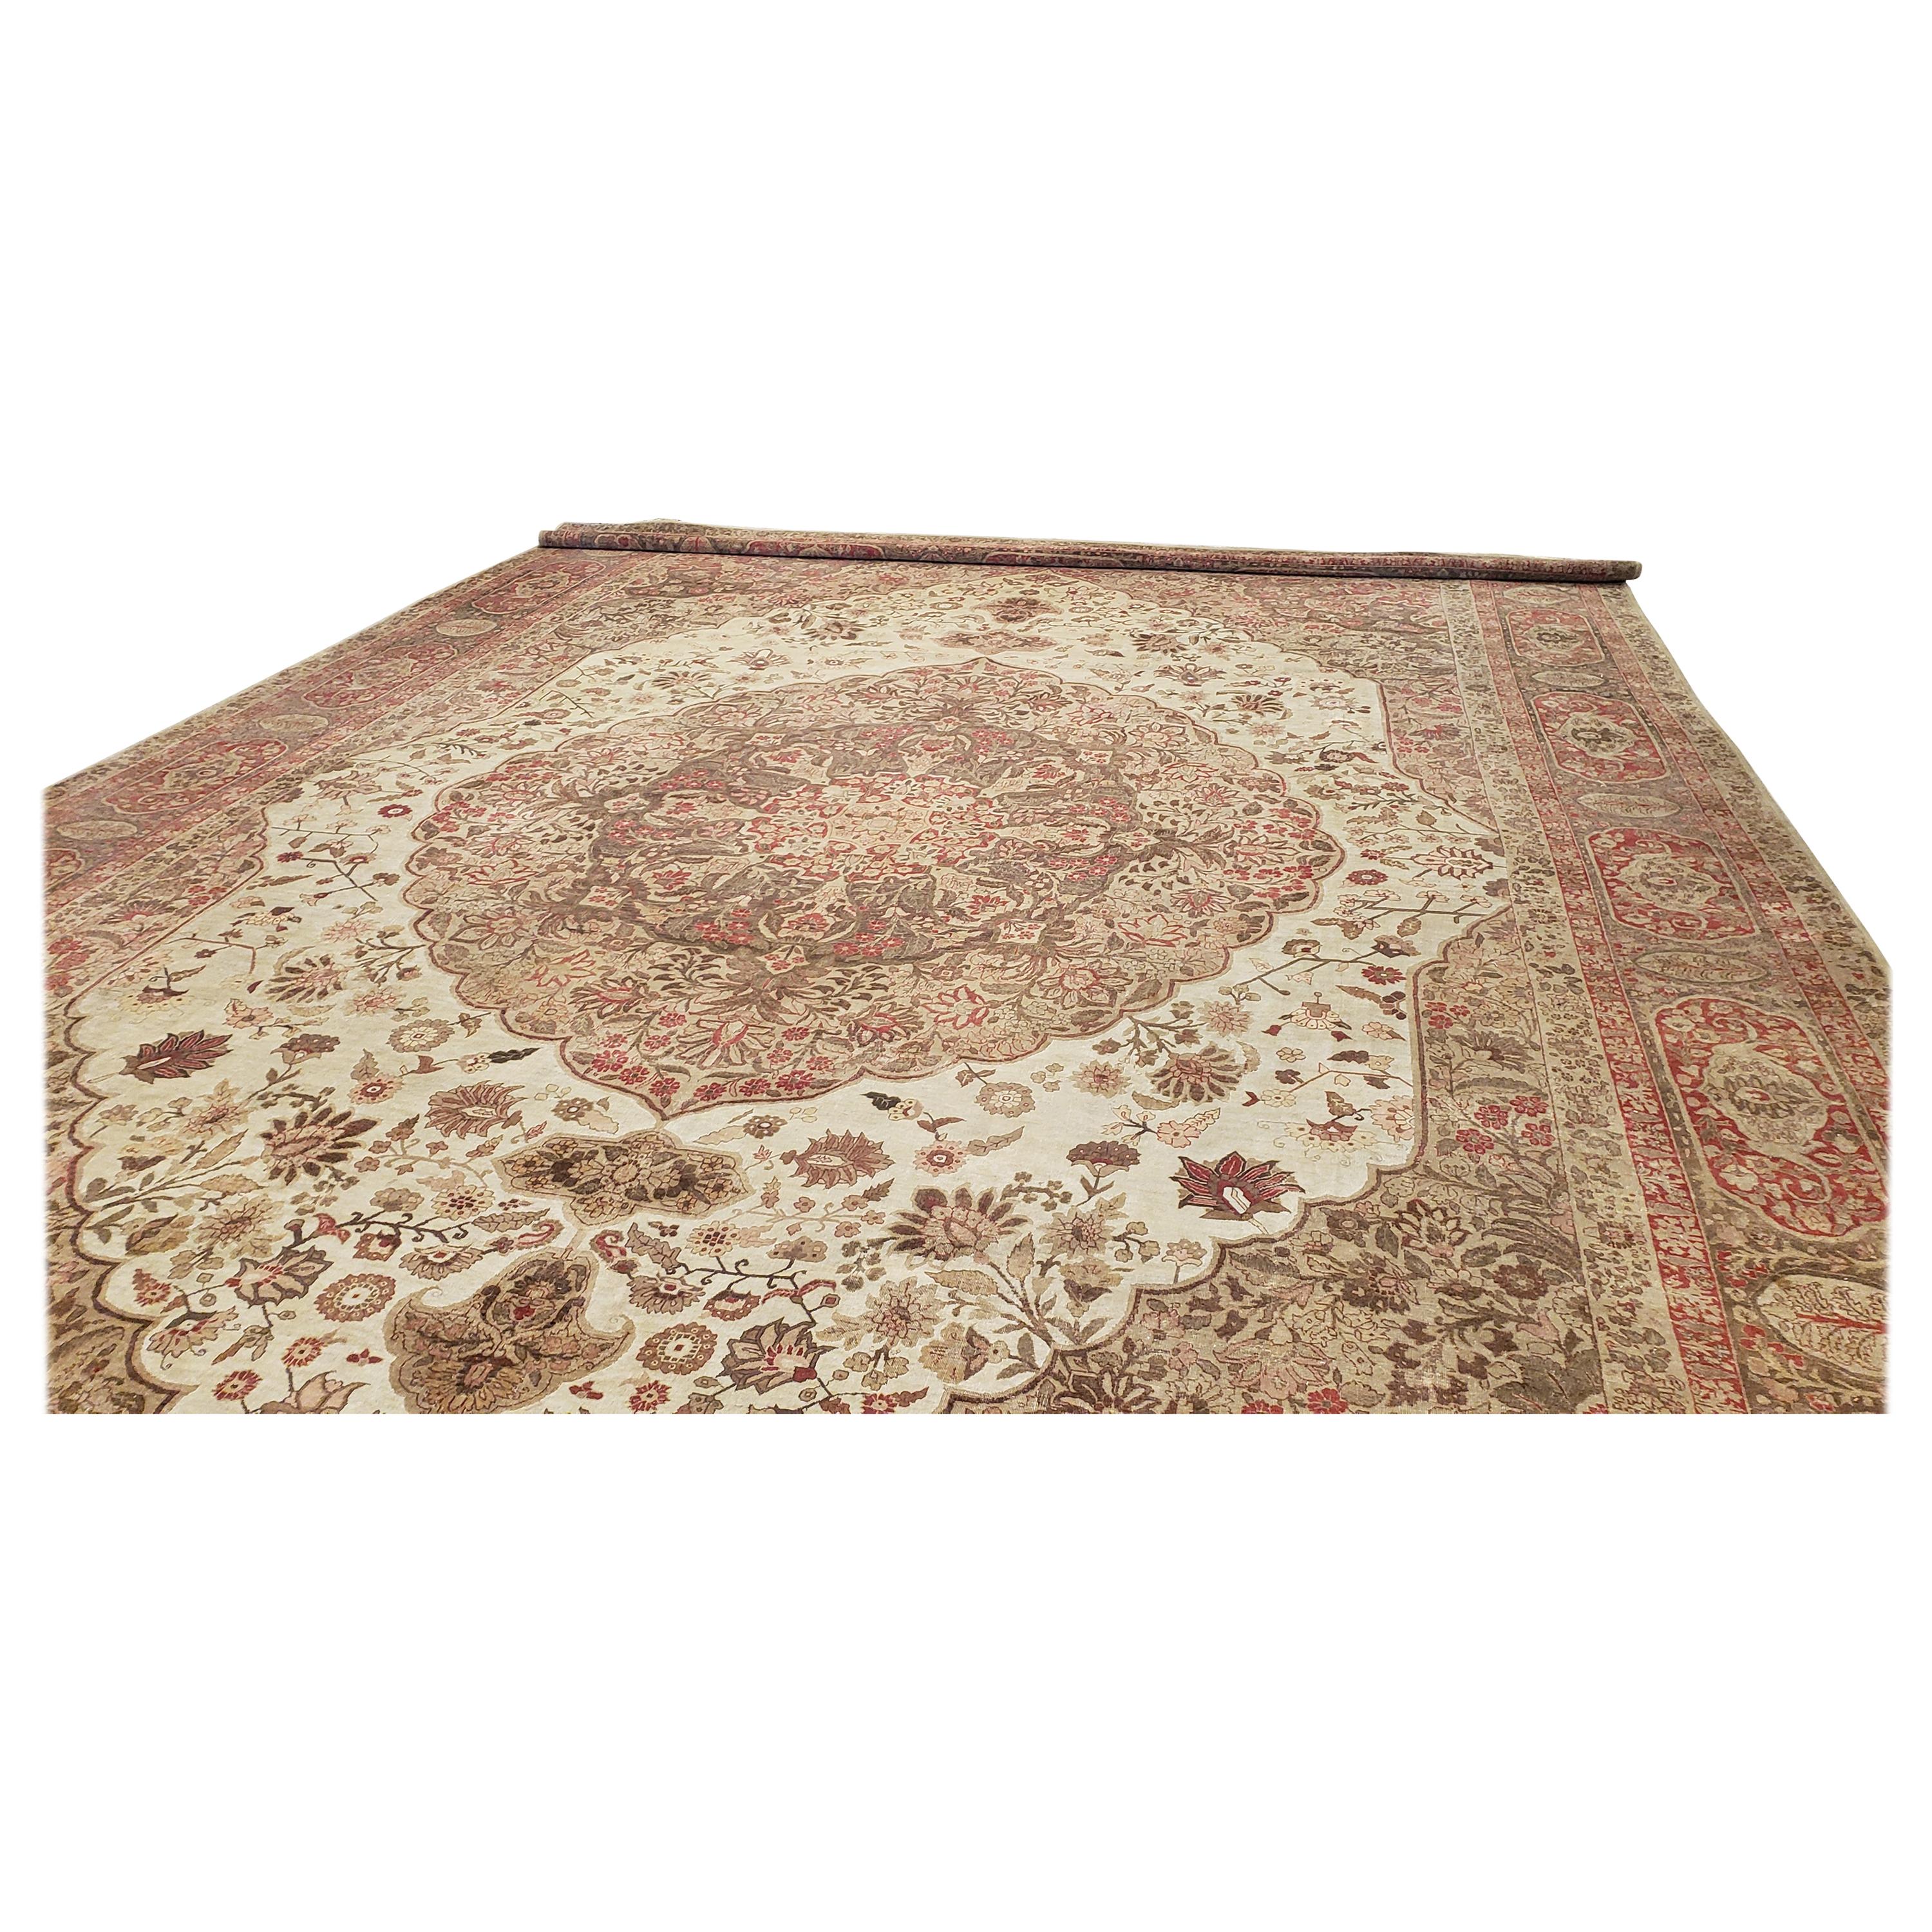 Antique Tabriz Carpet, Hadji Jalili Persian Rug, Earth Tones, Light Blue, Coral